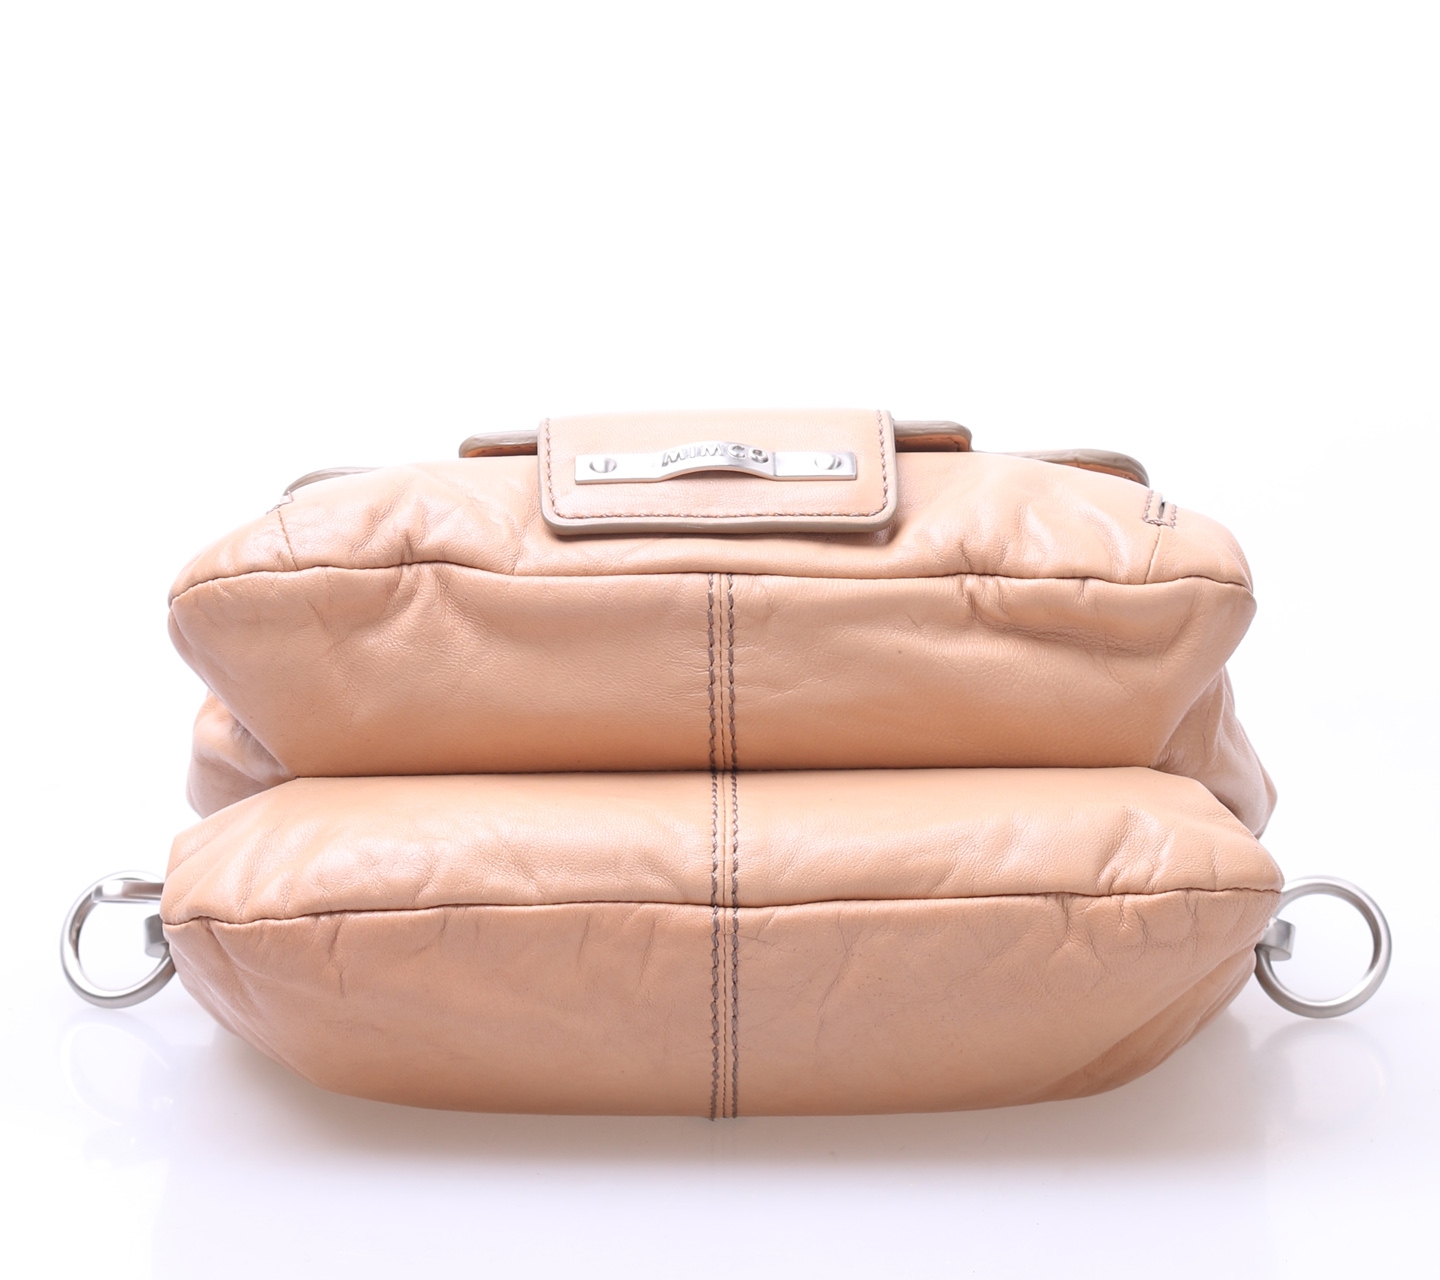 Mimco light brown satchel